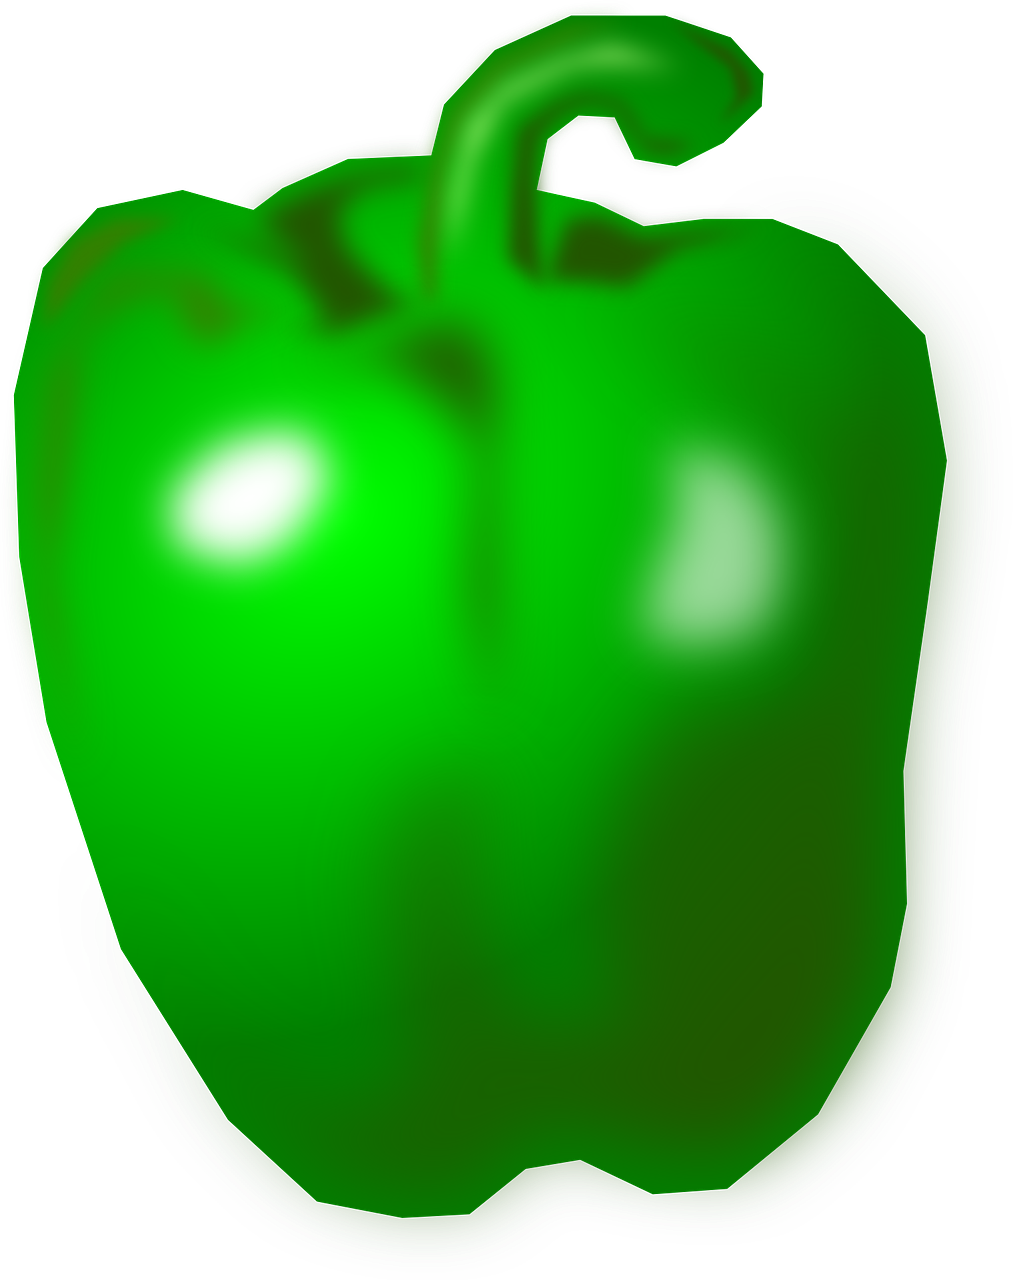 Download PNG image - Vector Green Bell Pepper Transparent Background 